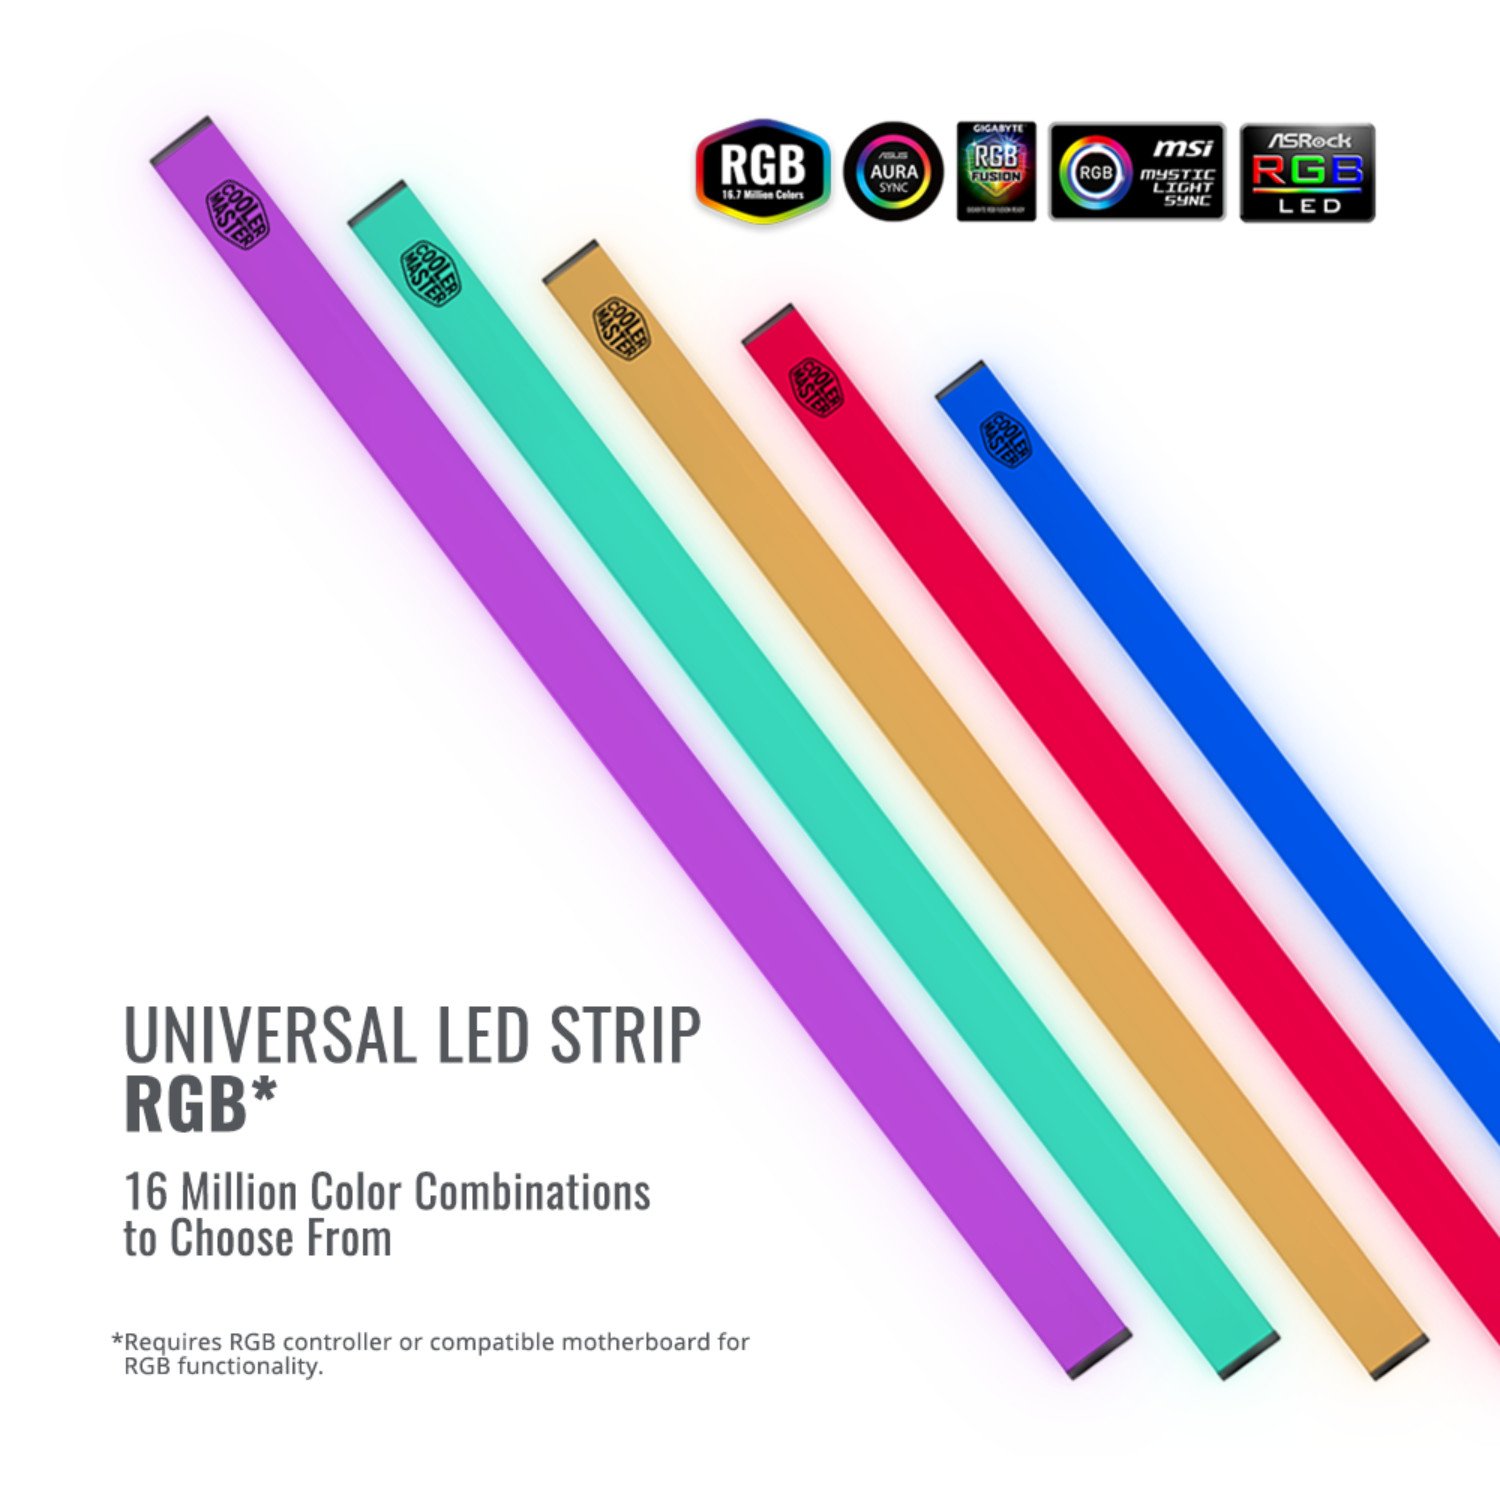 Cooler Master Universal LED Strip - LED strip for all Casings, 2 PC per pack, SATA, WHITE, RED